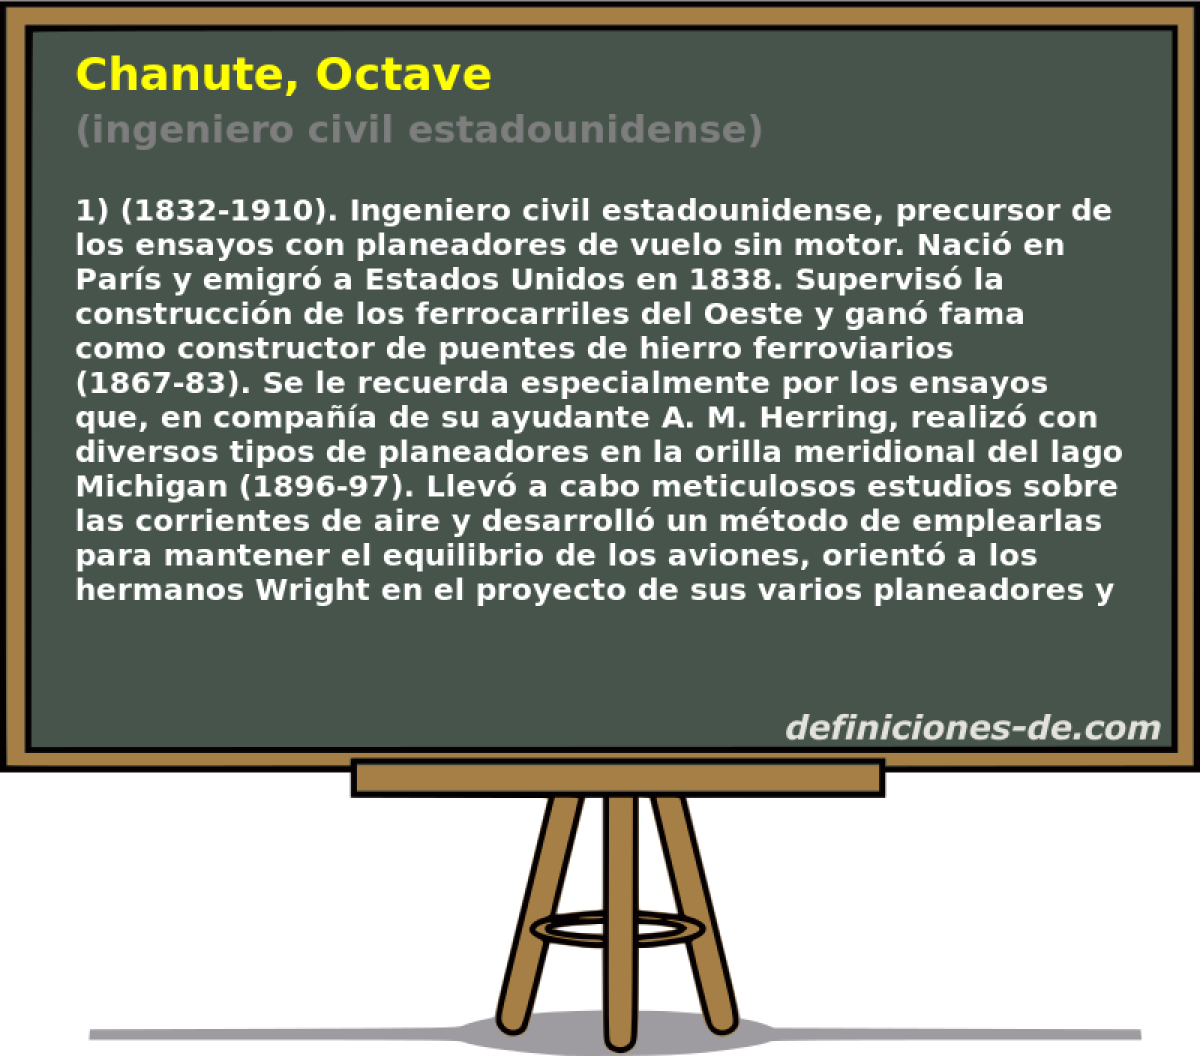 Chanute, Octave (ingeniero civil estadounidense)